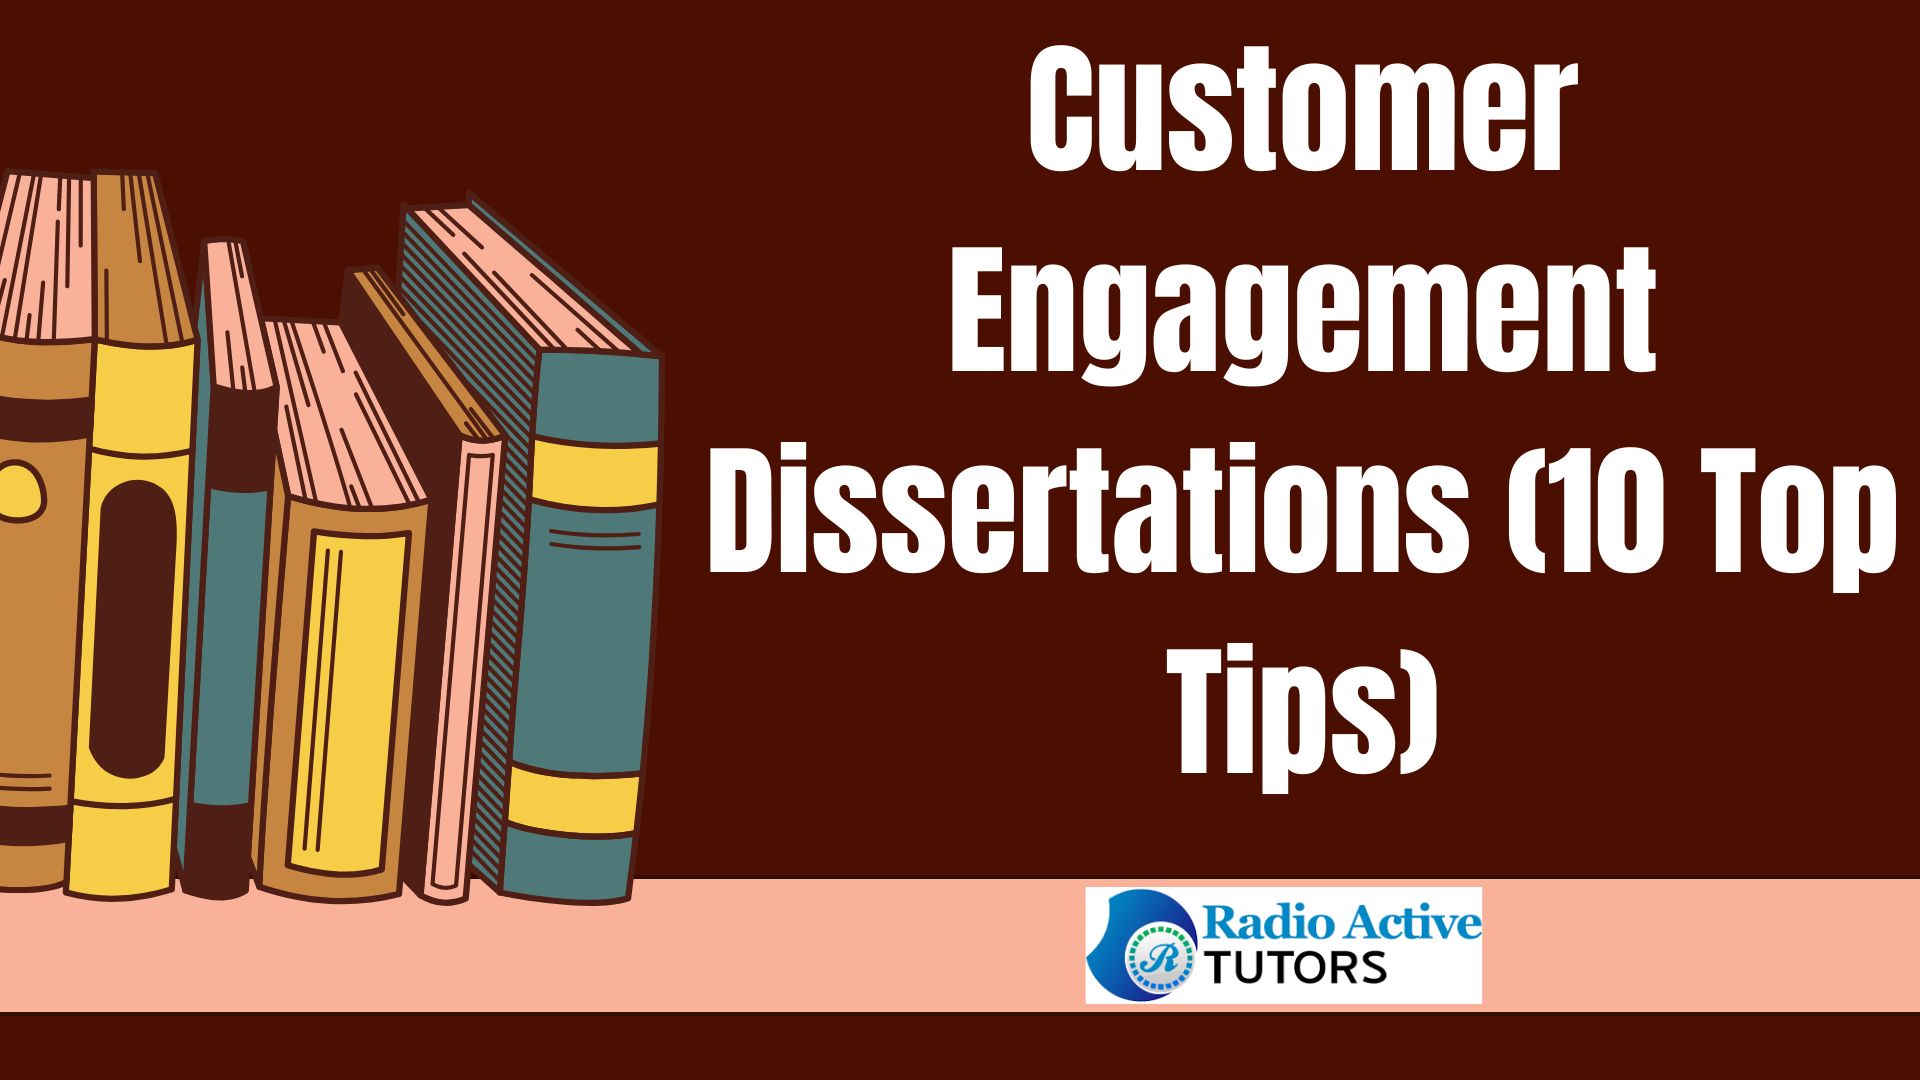 Customer Engagement Dissertations (10 Top Tips)